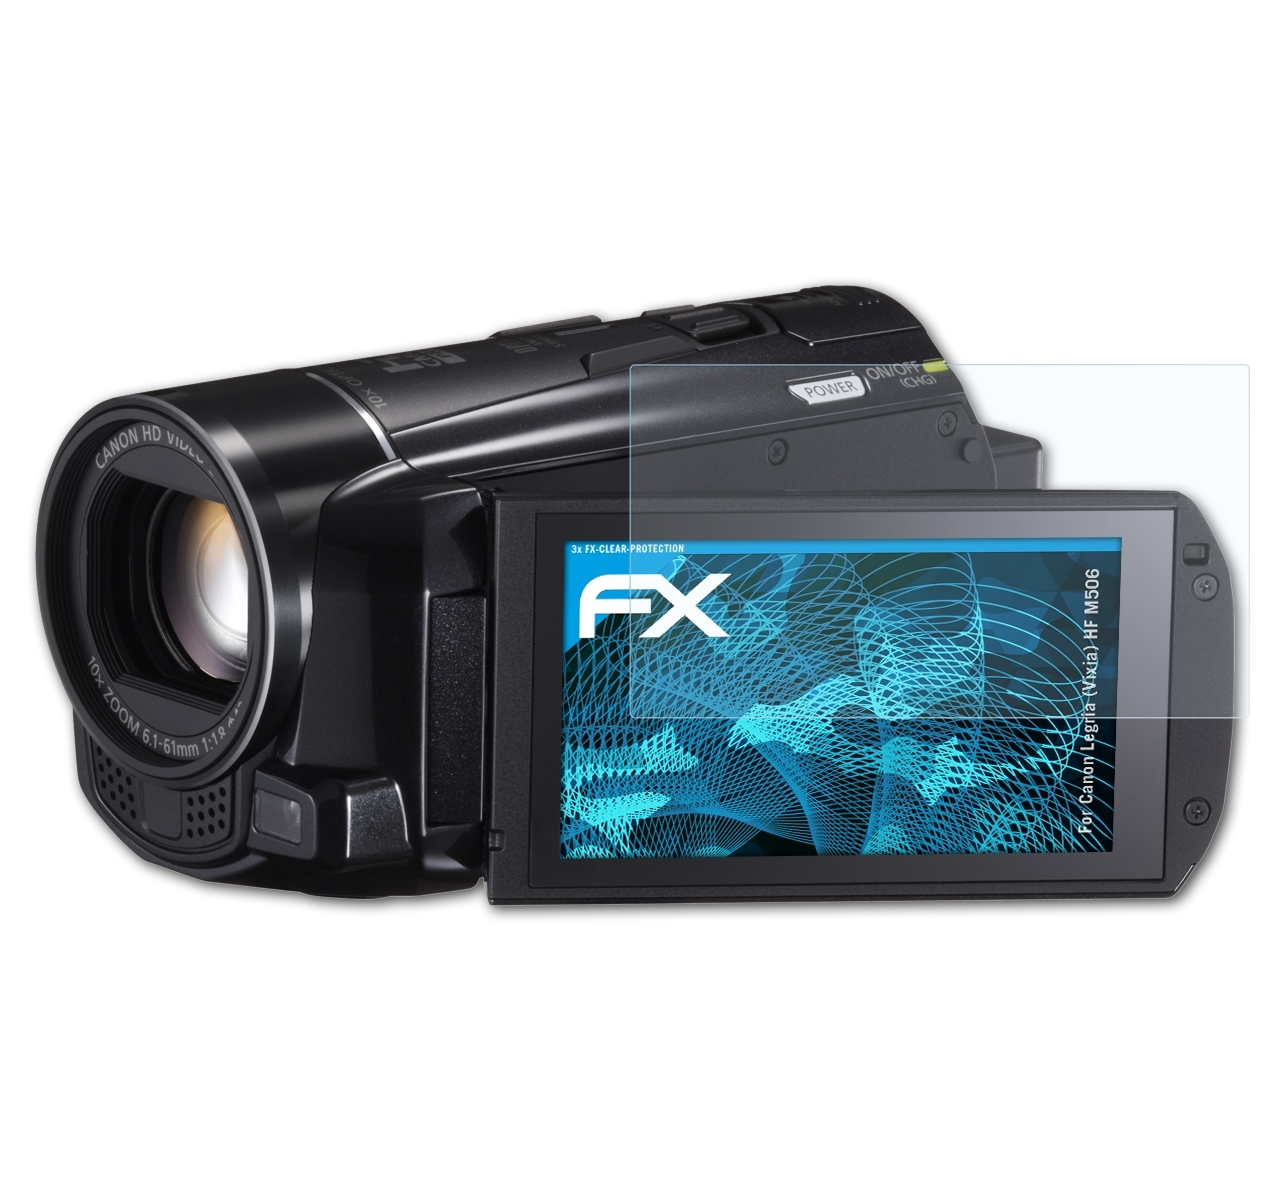 Displayschutz(für HF (Vixia) M506) ATFOLIX 3x FX-Clear Legria Canon